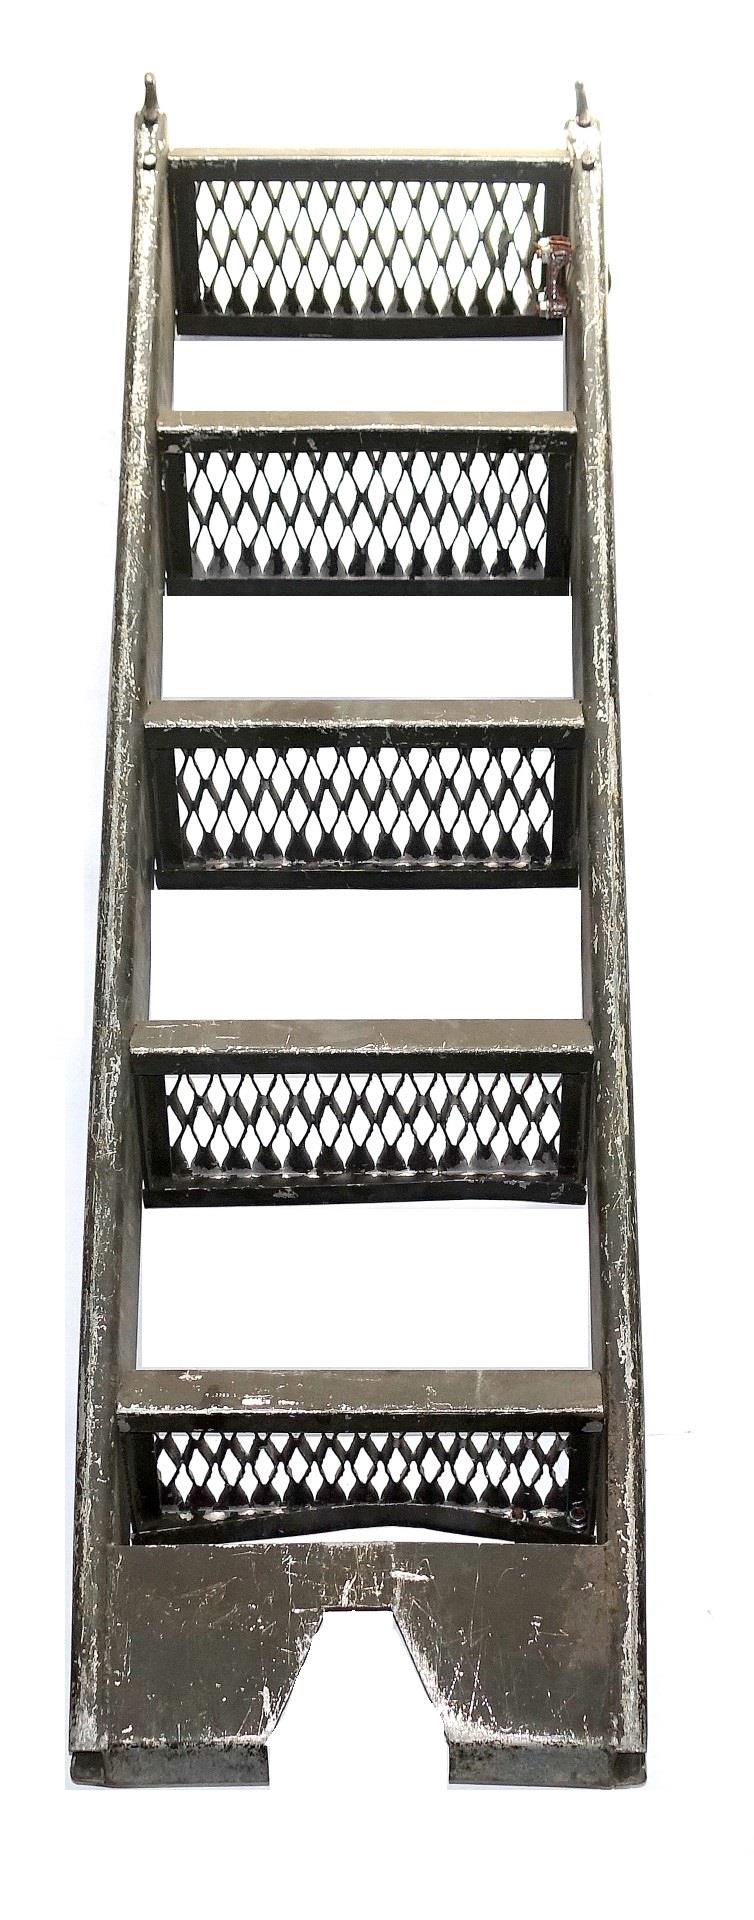 ALL-5213 | ALL-5213 5-Step Boarding Ladder (6) (Large).JPG